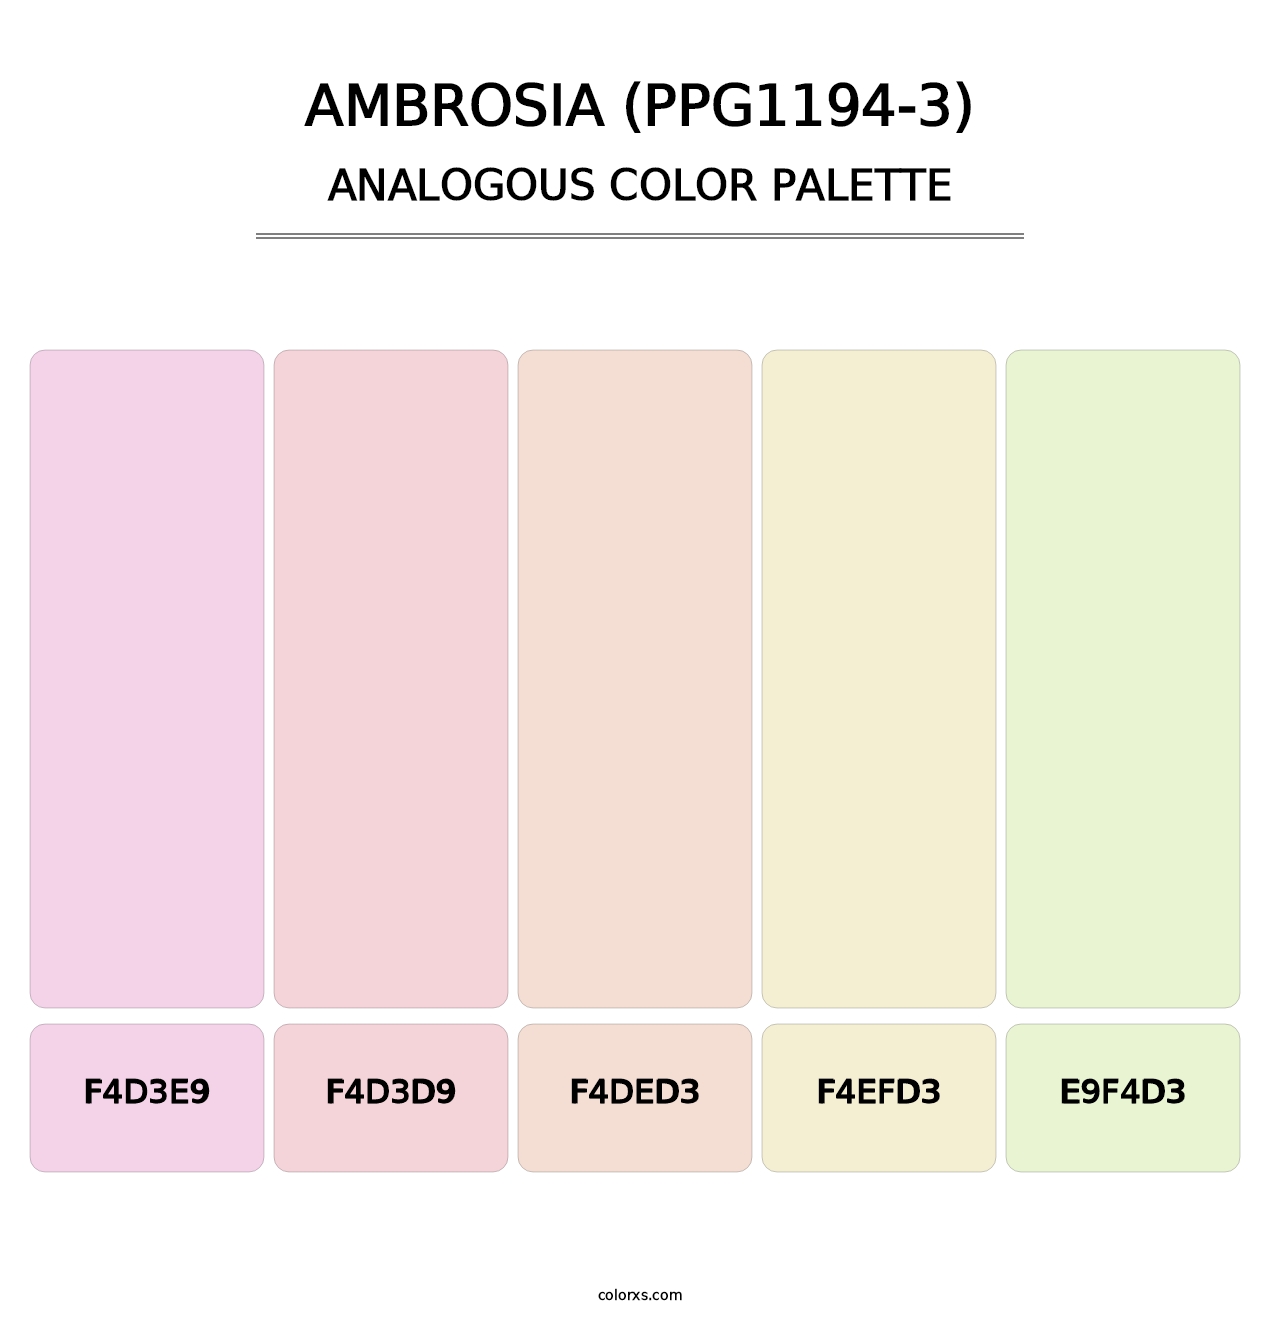 Ambrosia (PPG1194-3) - Analogous Color Palette